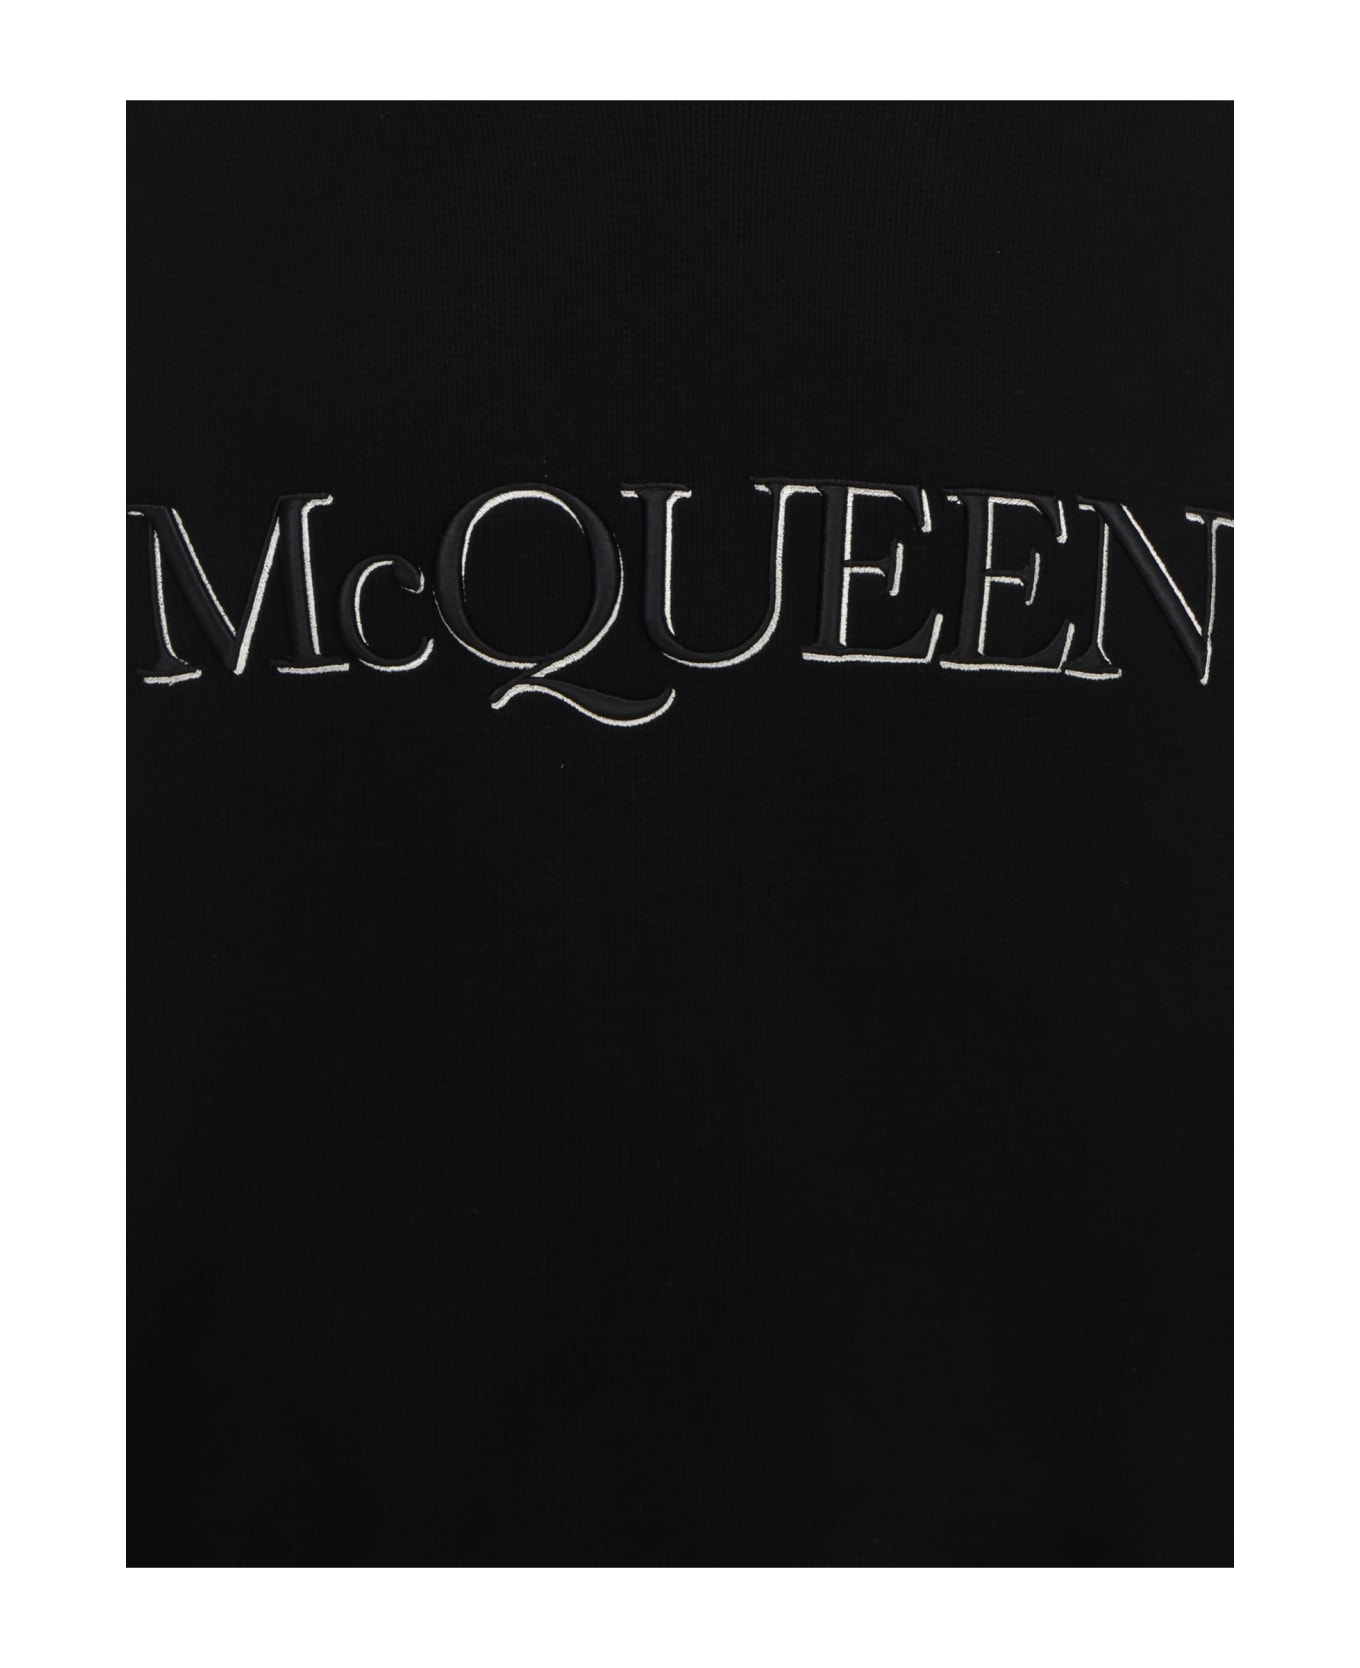 Alexander McQueen Cotton Crew-neck Sweater - black